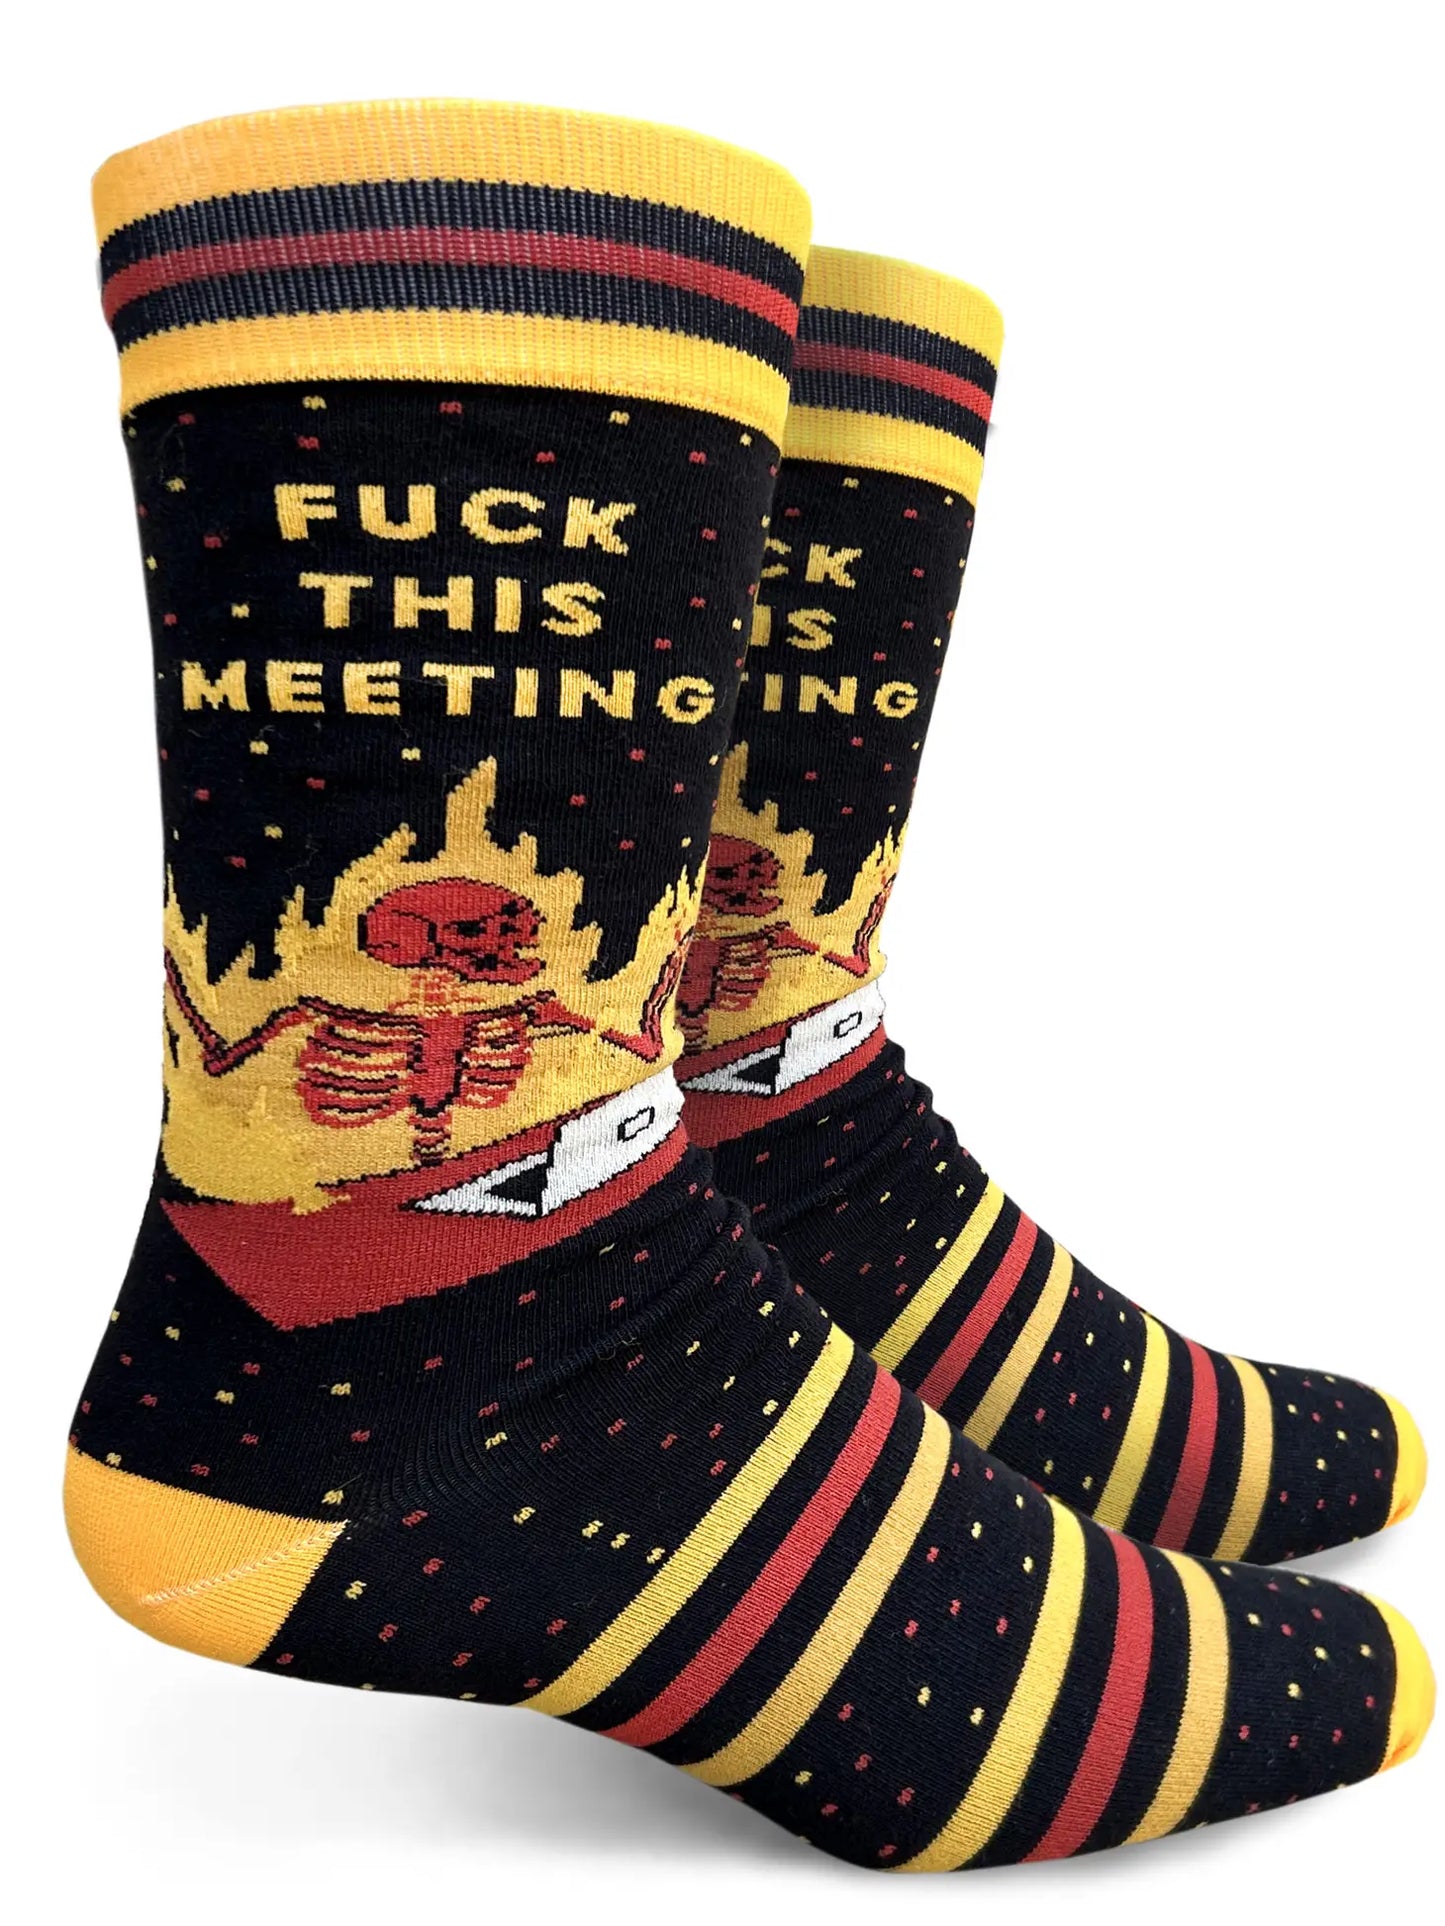 Fuck This Meeting Men's Socks